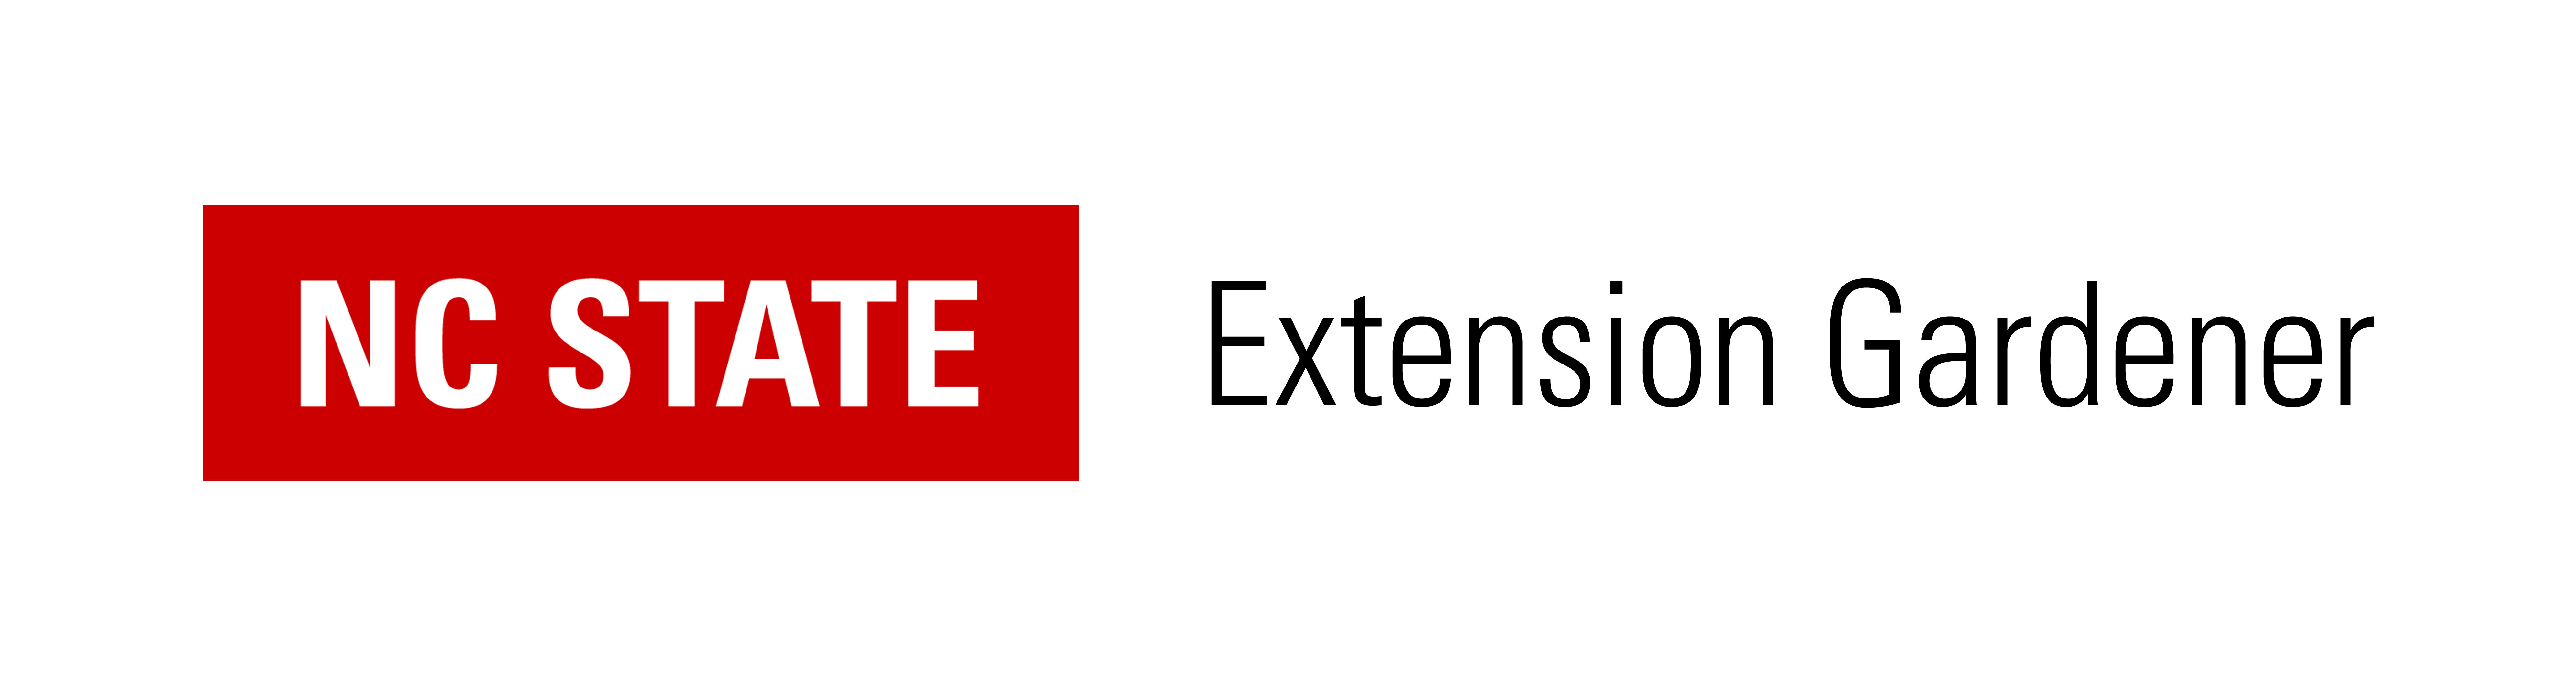 Extension Gardener Logo